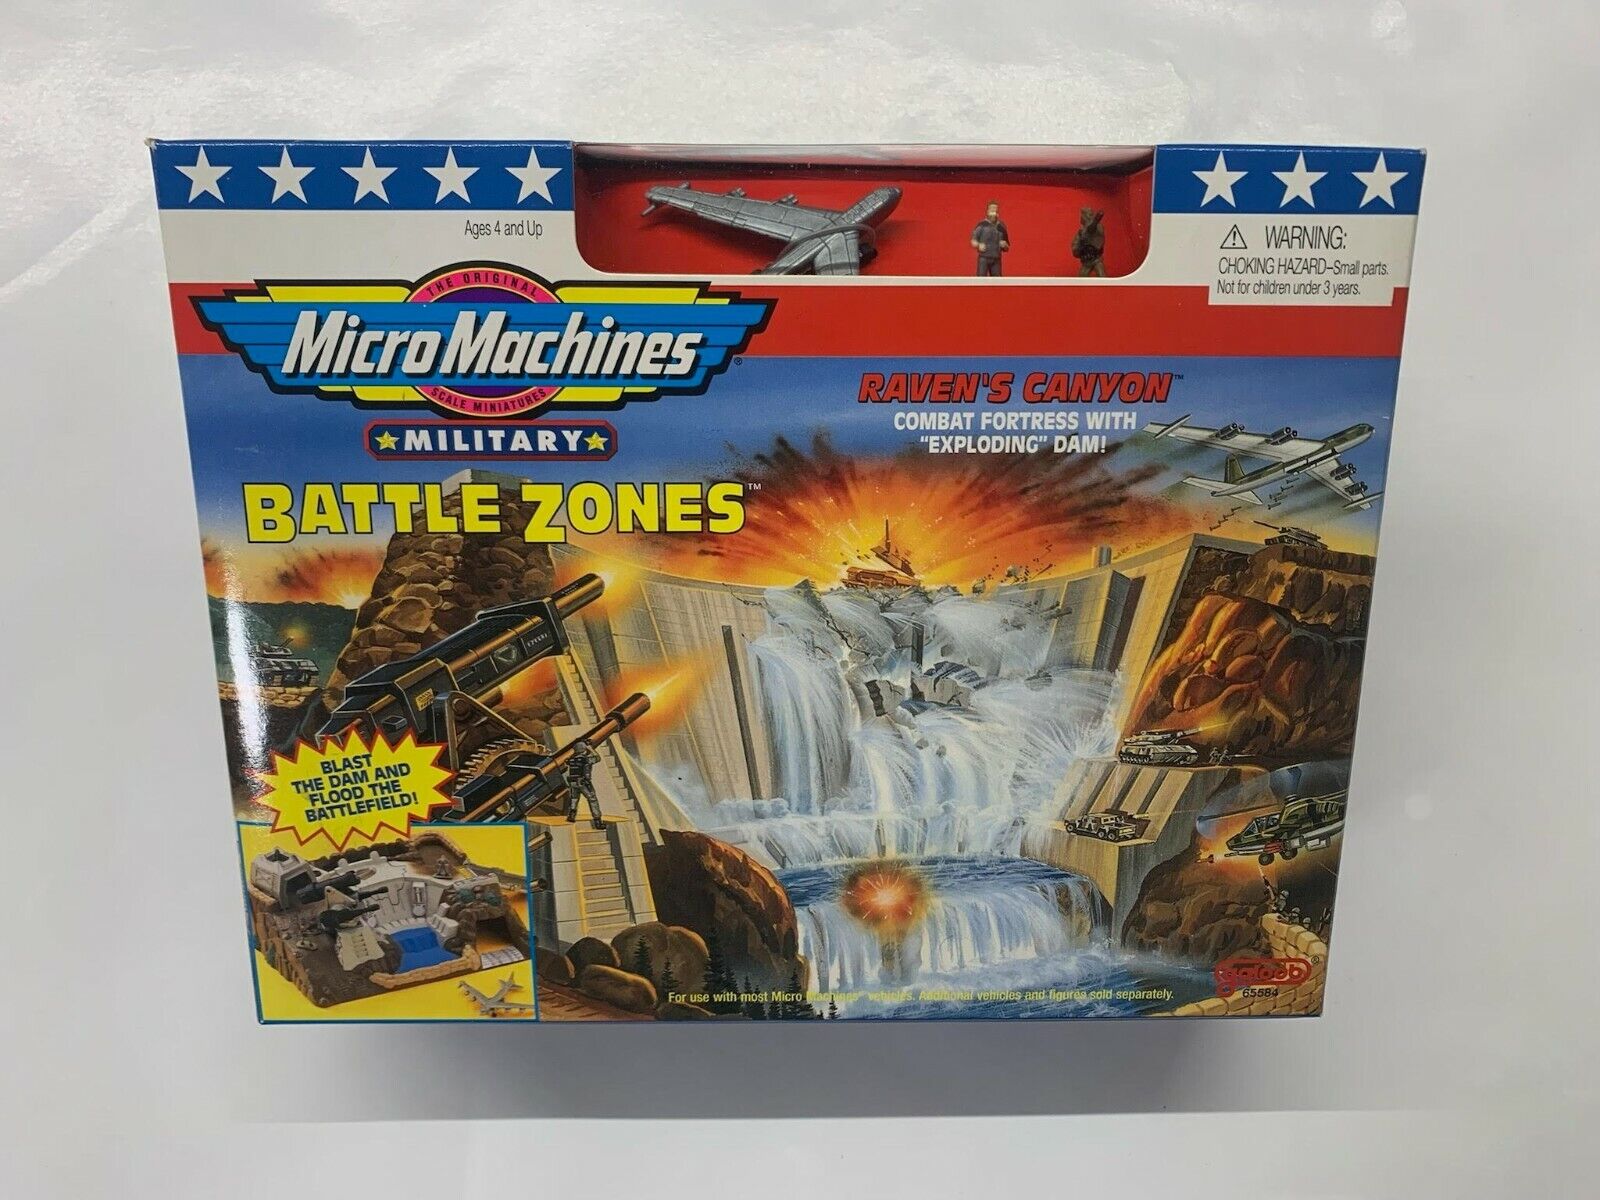 NEW - RARE (1997) Micro Machines Military Battle Zones Raven's Canyon  47246655847 | eBay